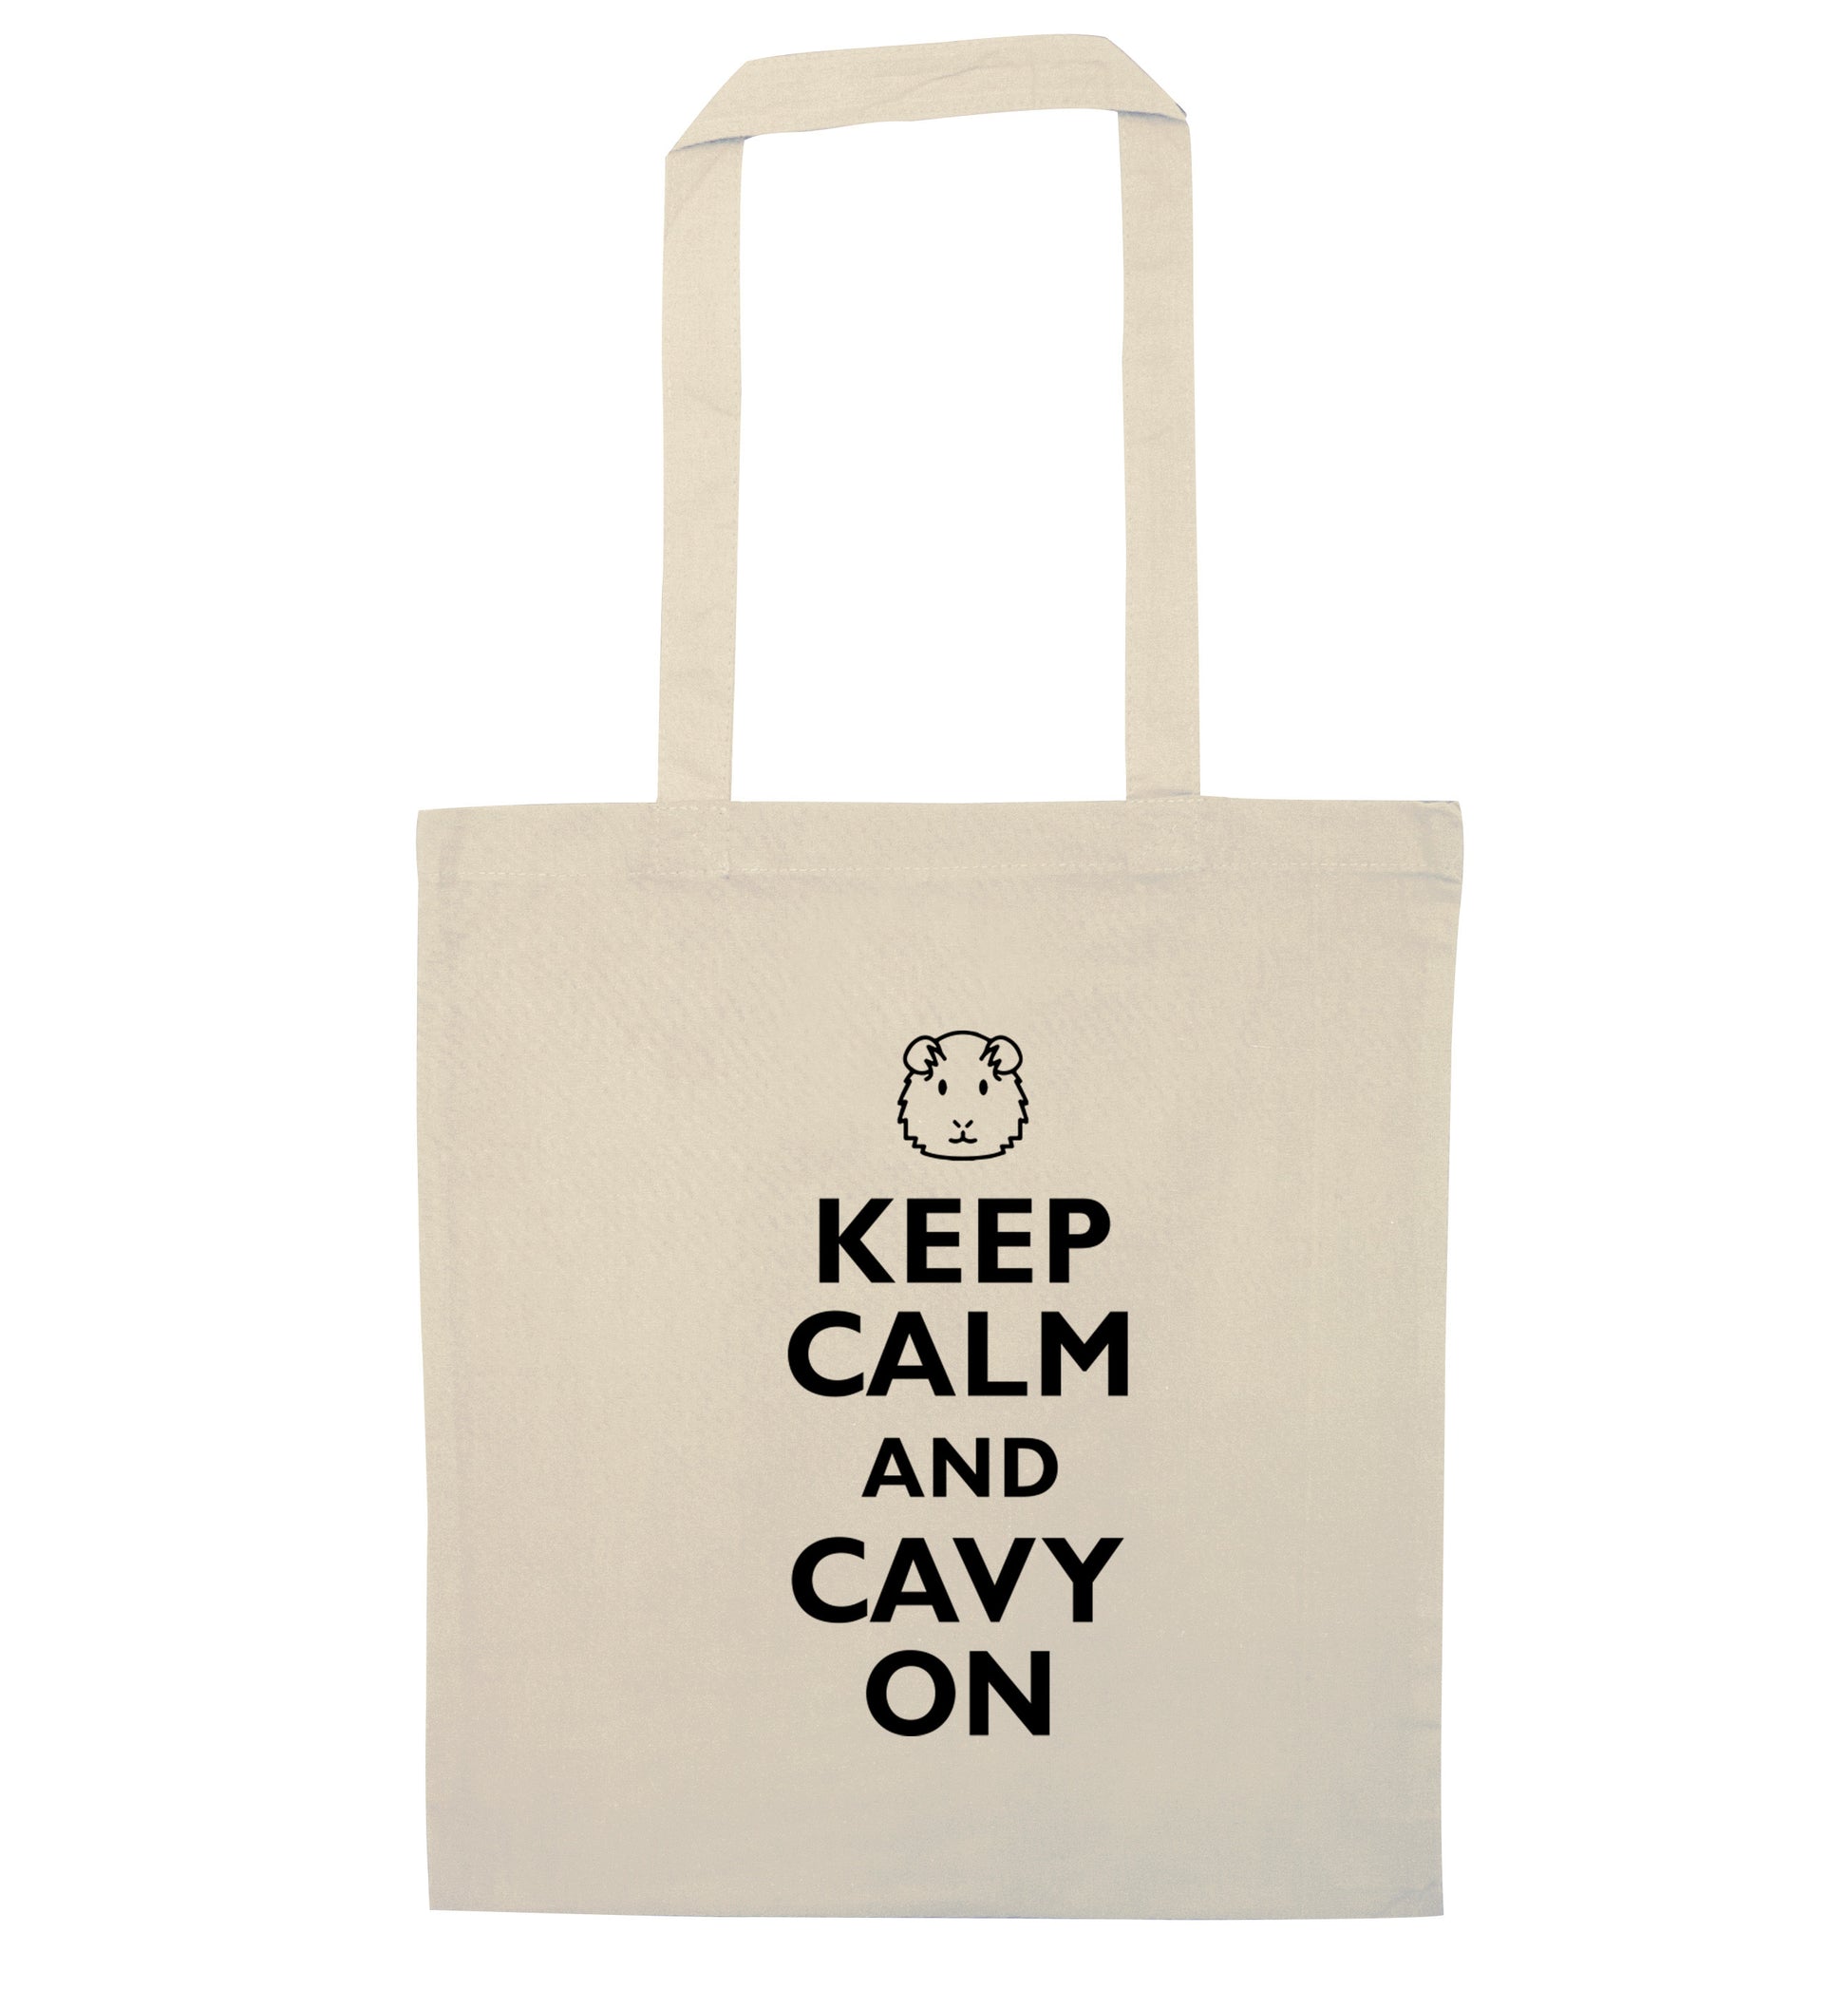 Keep calm and cavvy on natural tote bag